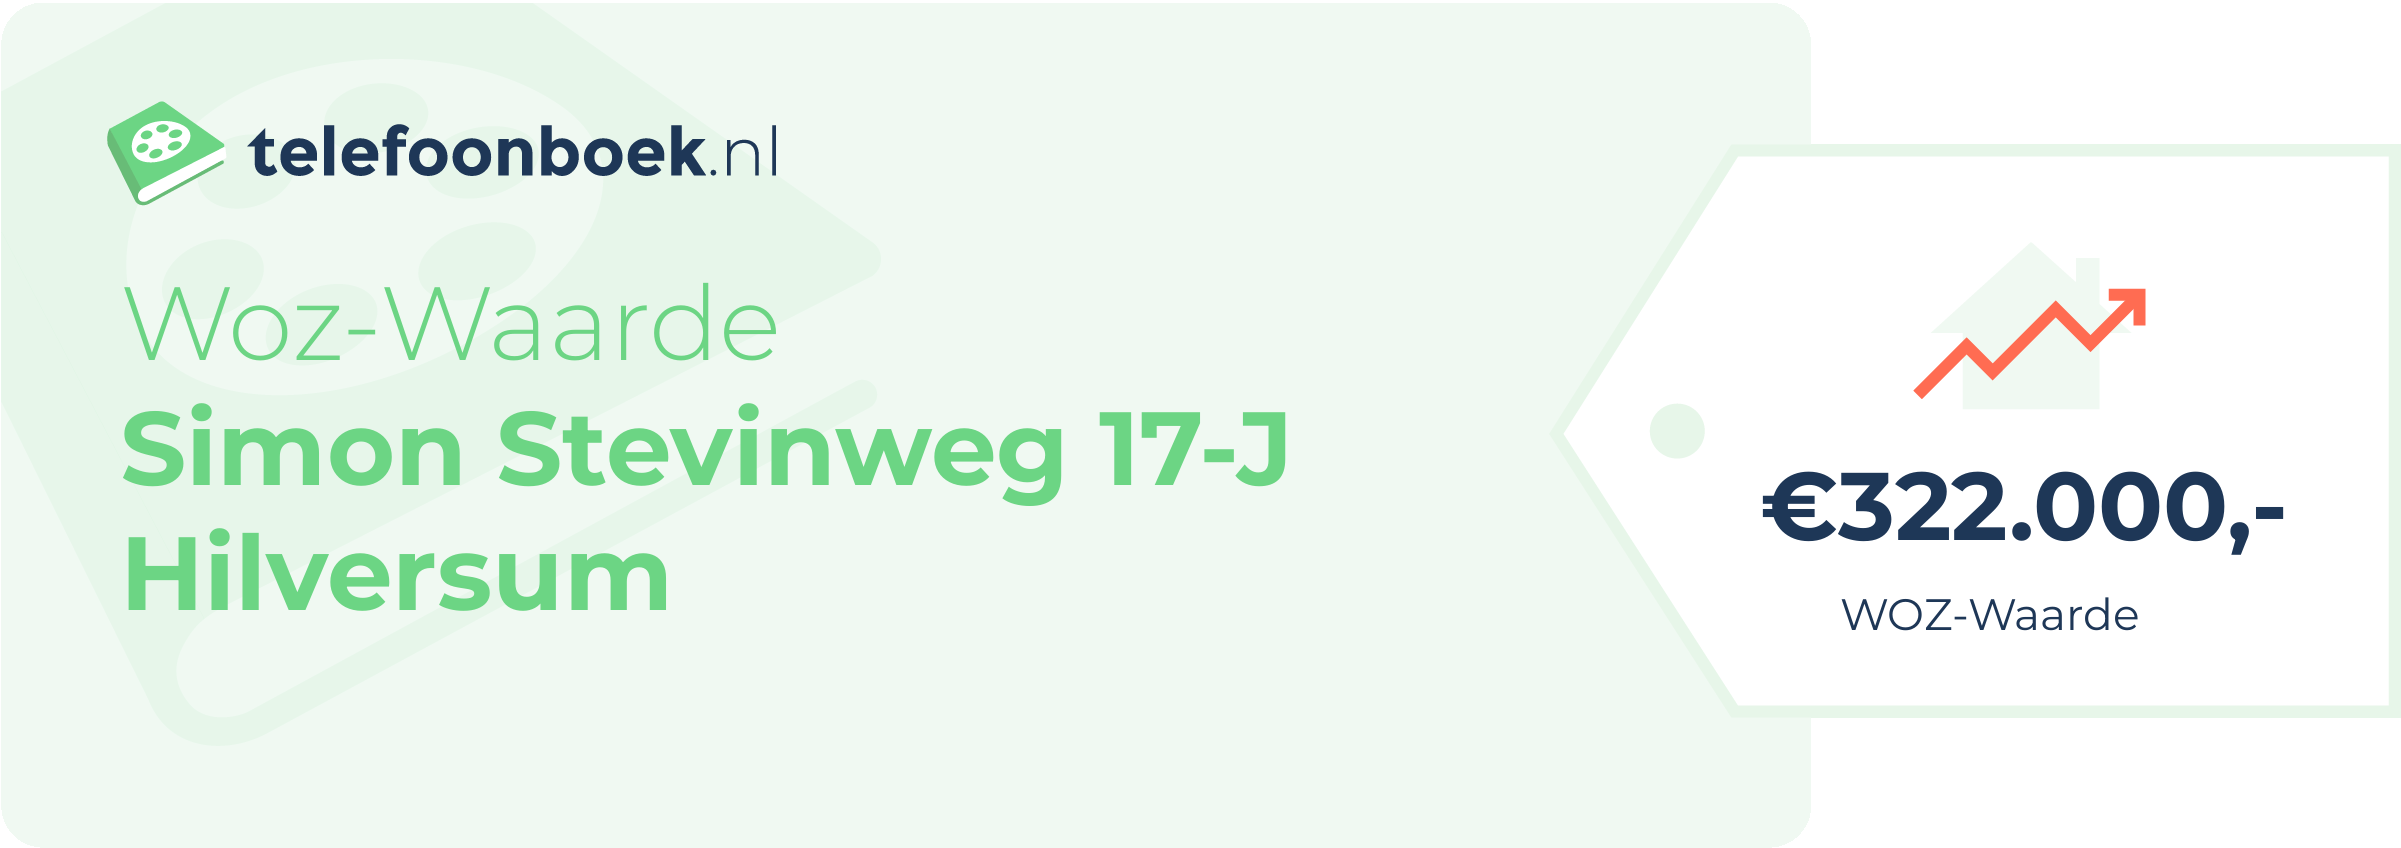 WOZ-waarde Simon Stevinweg 17-J Hilversum